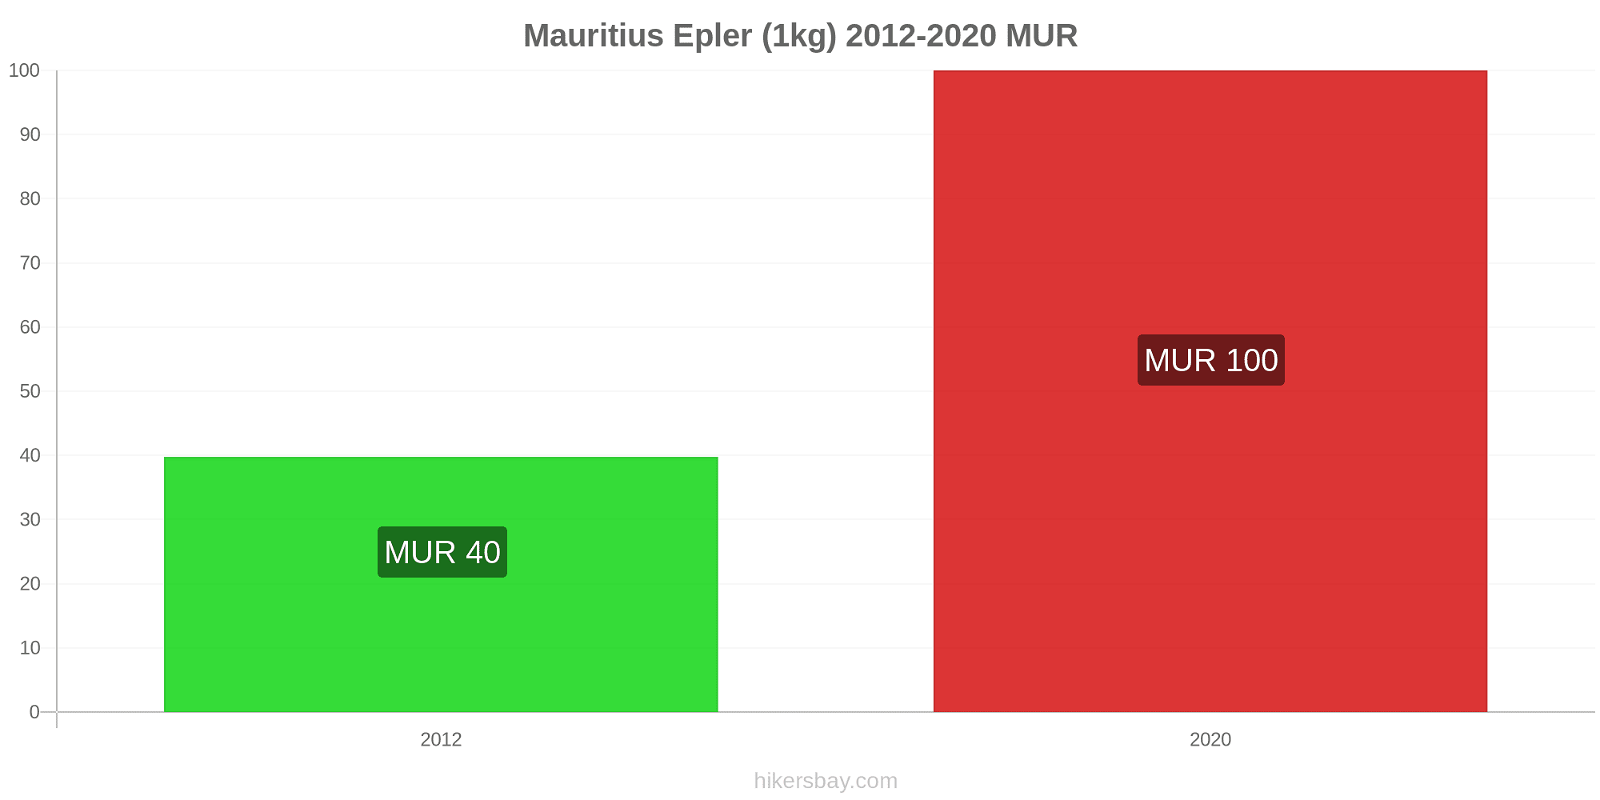 Mauritius prisendringer Epler (1kg) hikersbay.com